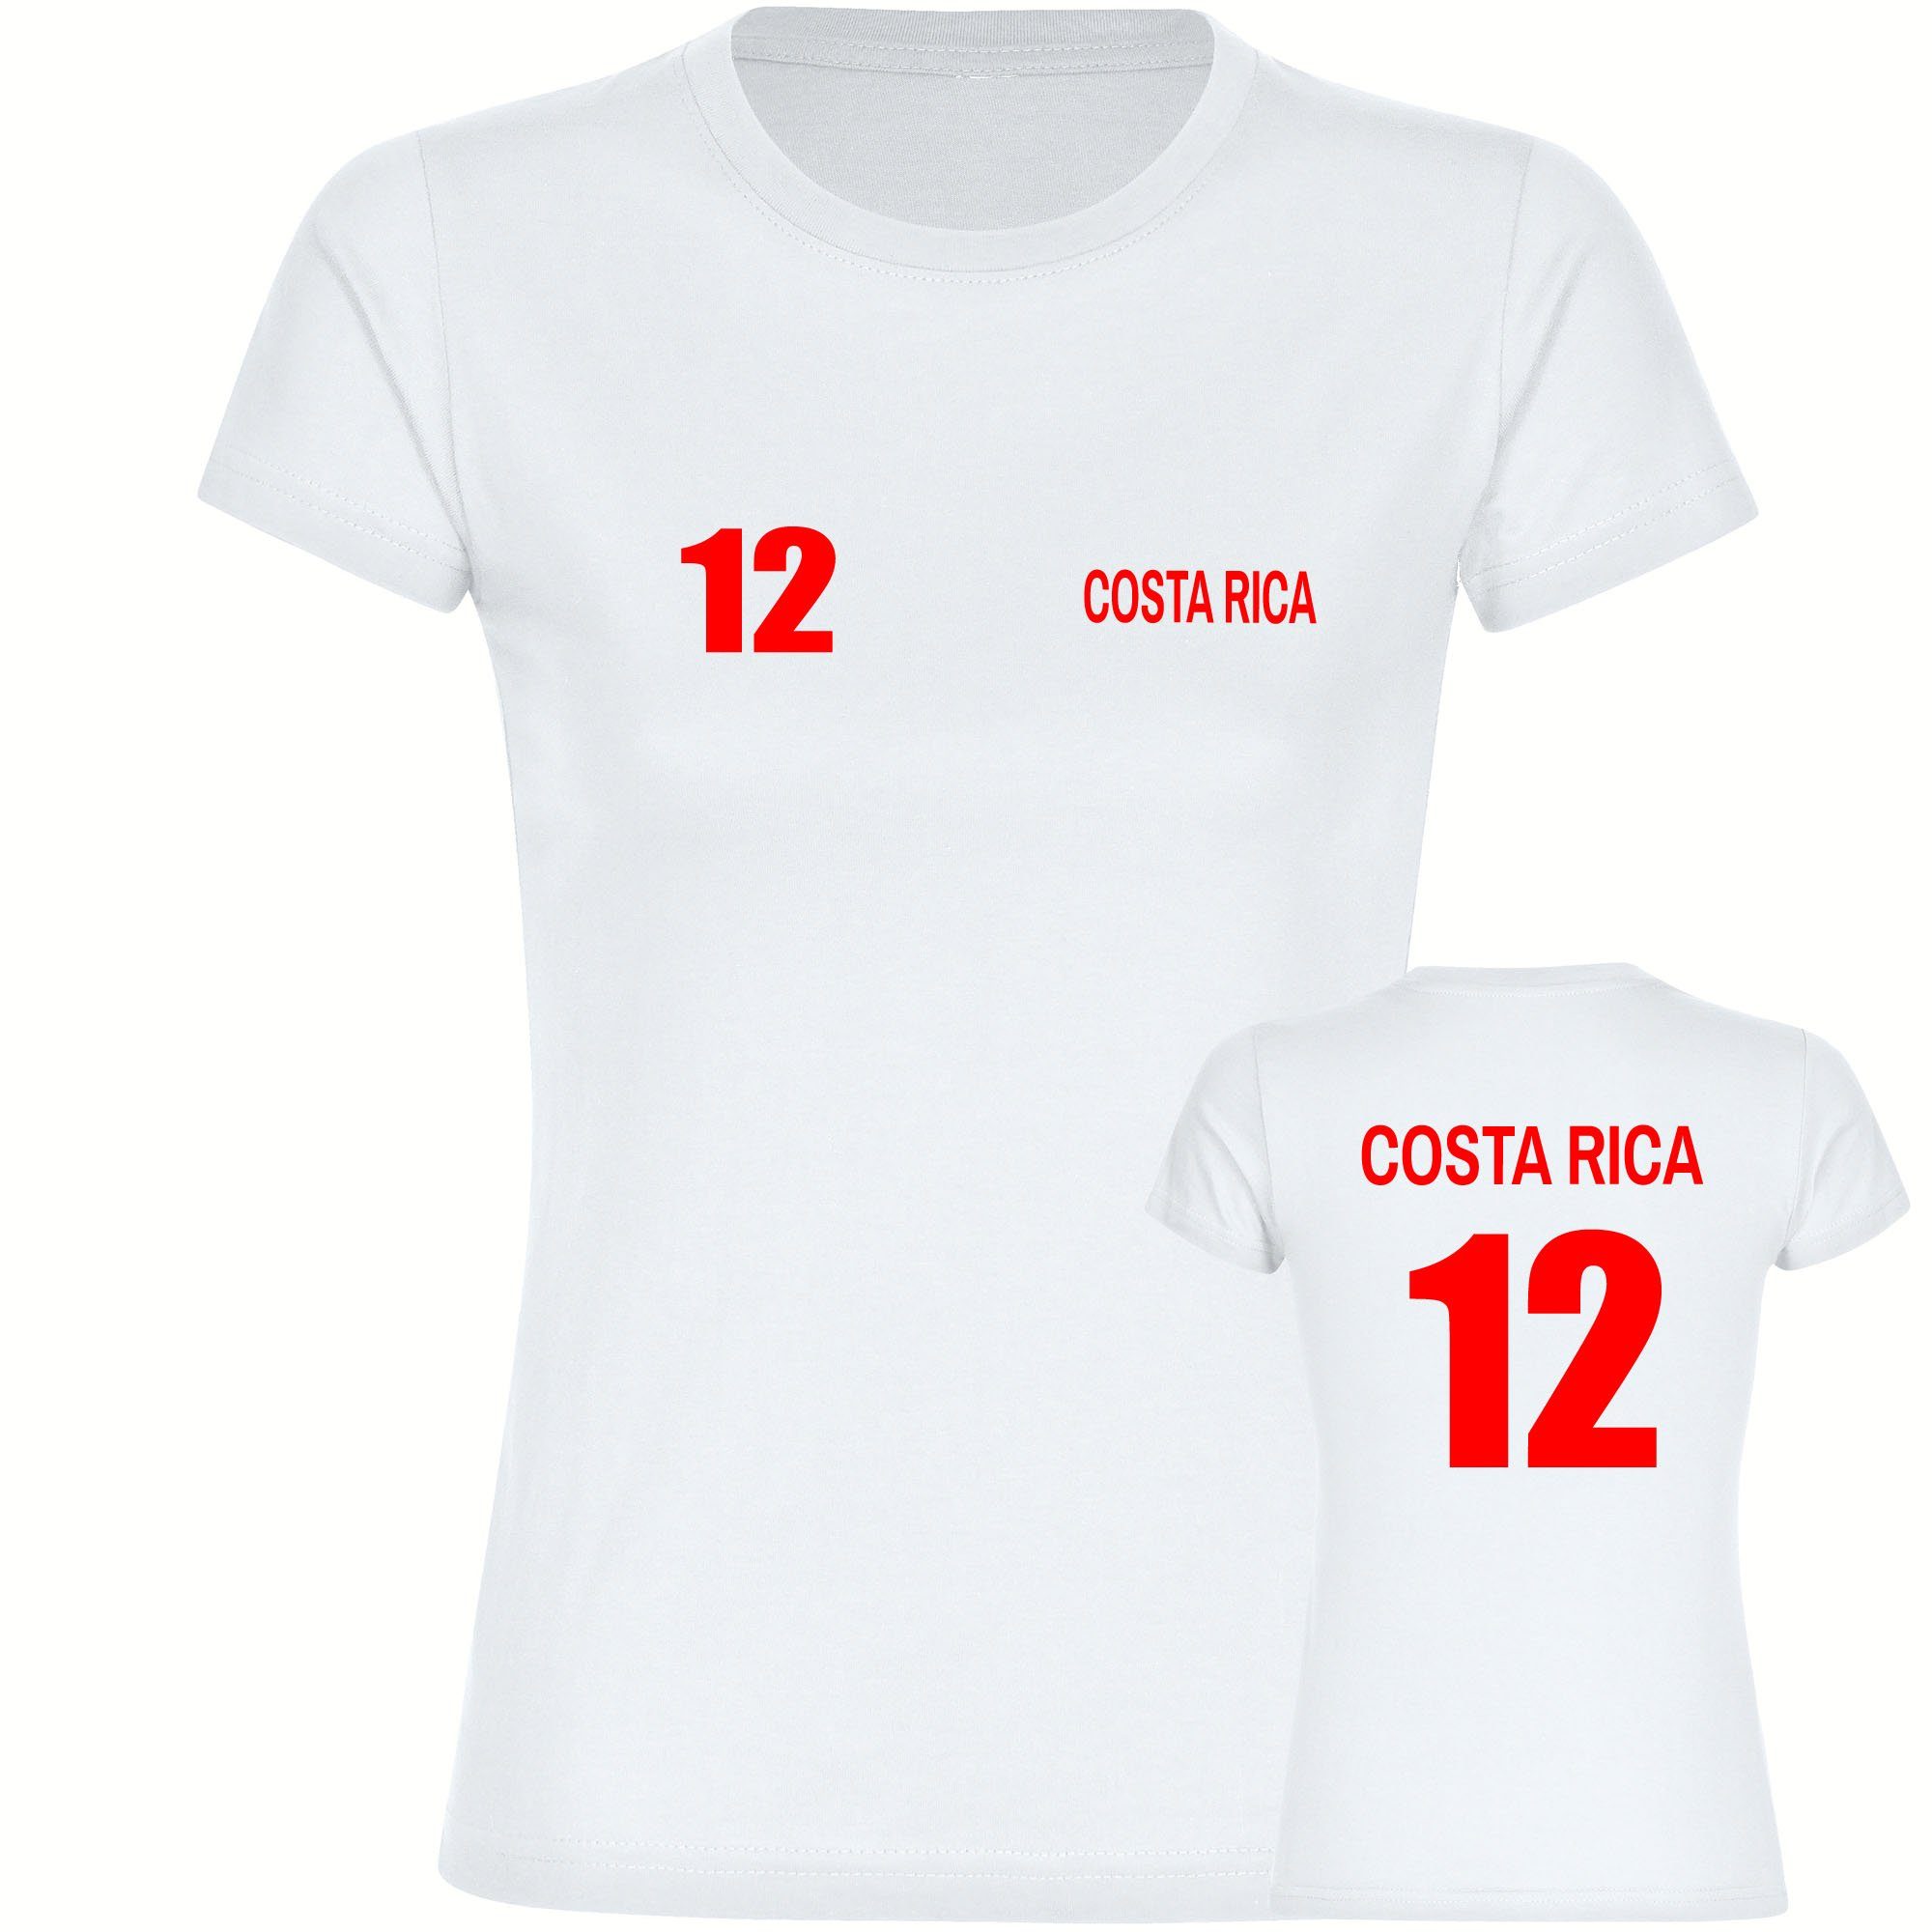 multifanshop T-Shirt Damen Costa Rica - Trikot 12 - Frauen